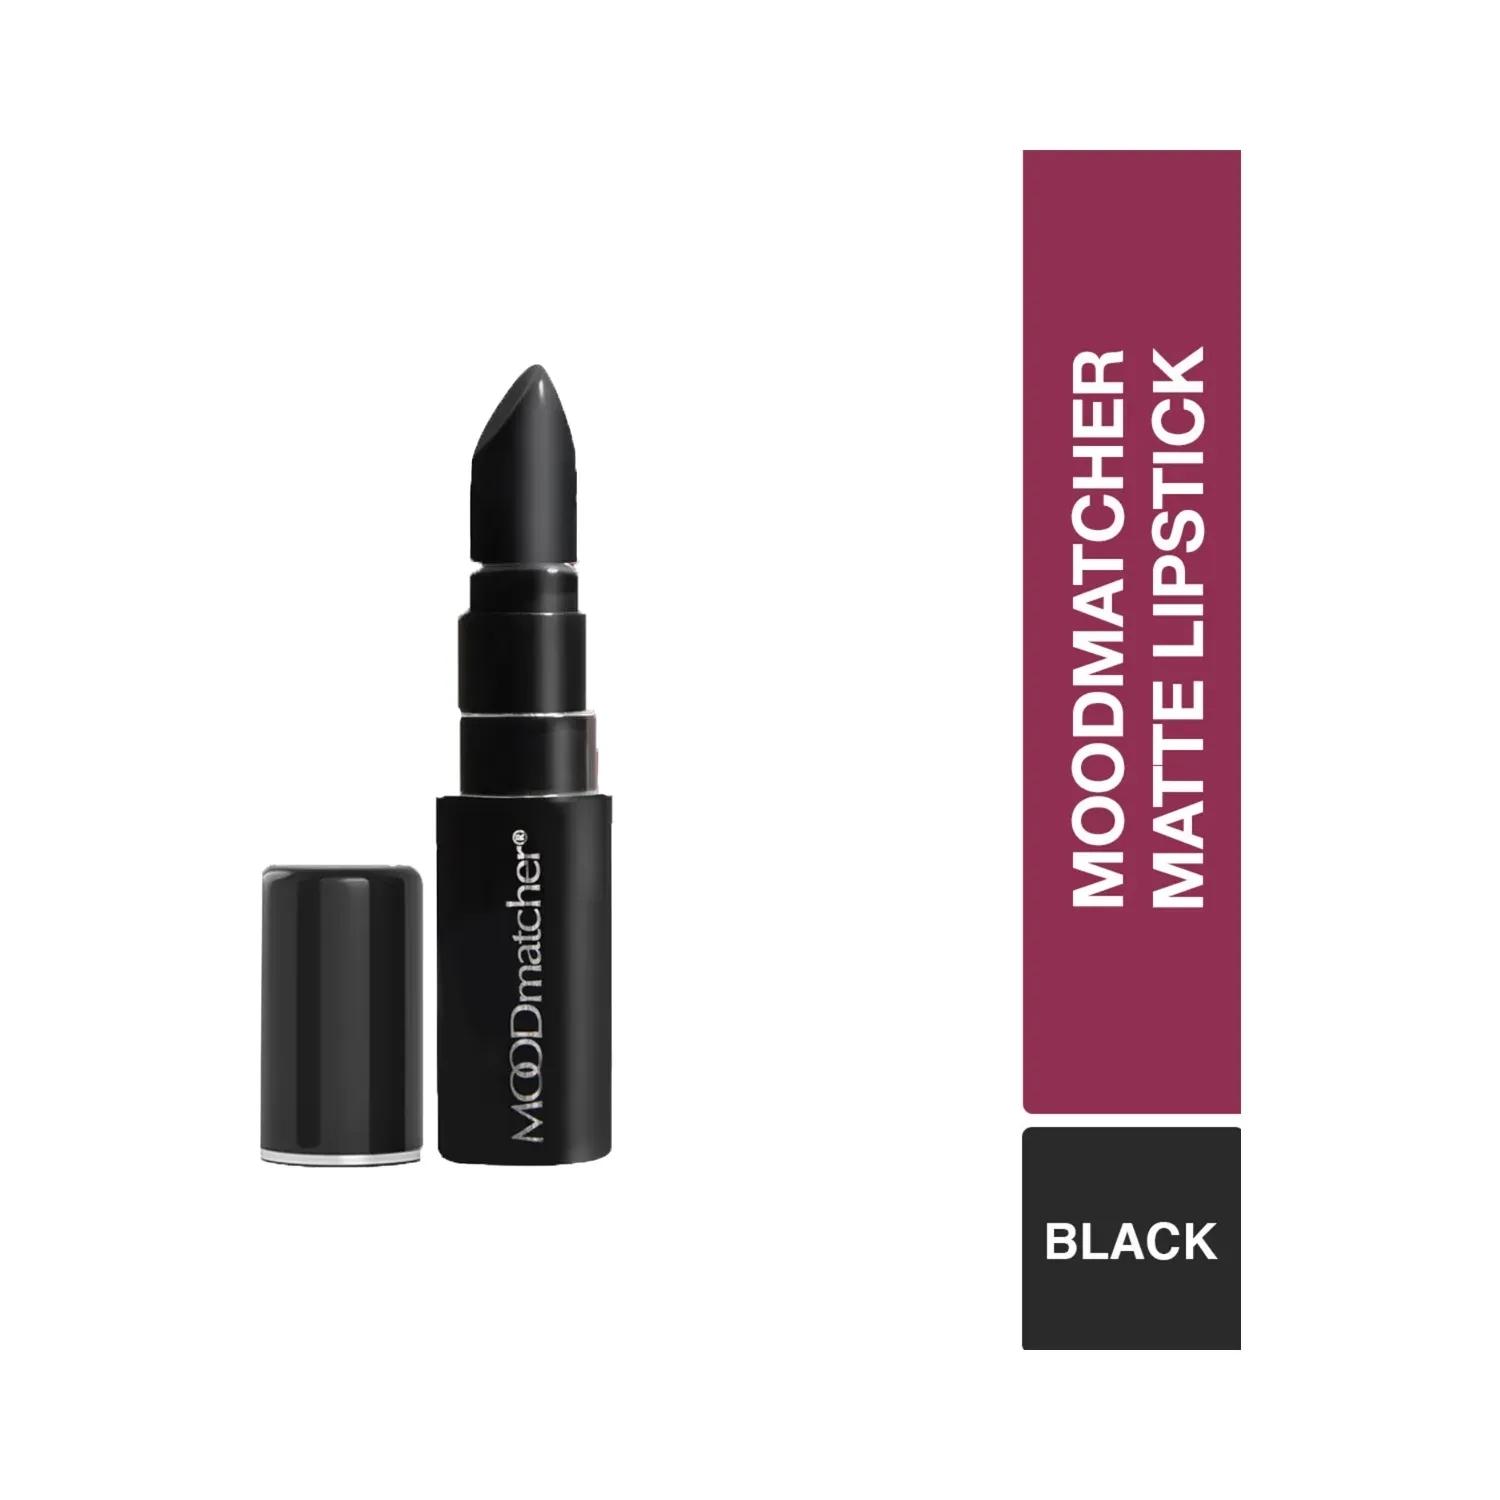 fran wilson moodmatcher lipstick - black (3.5g)